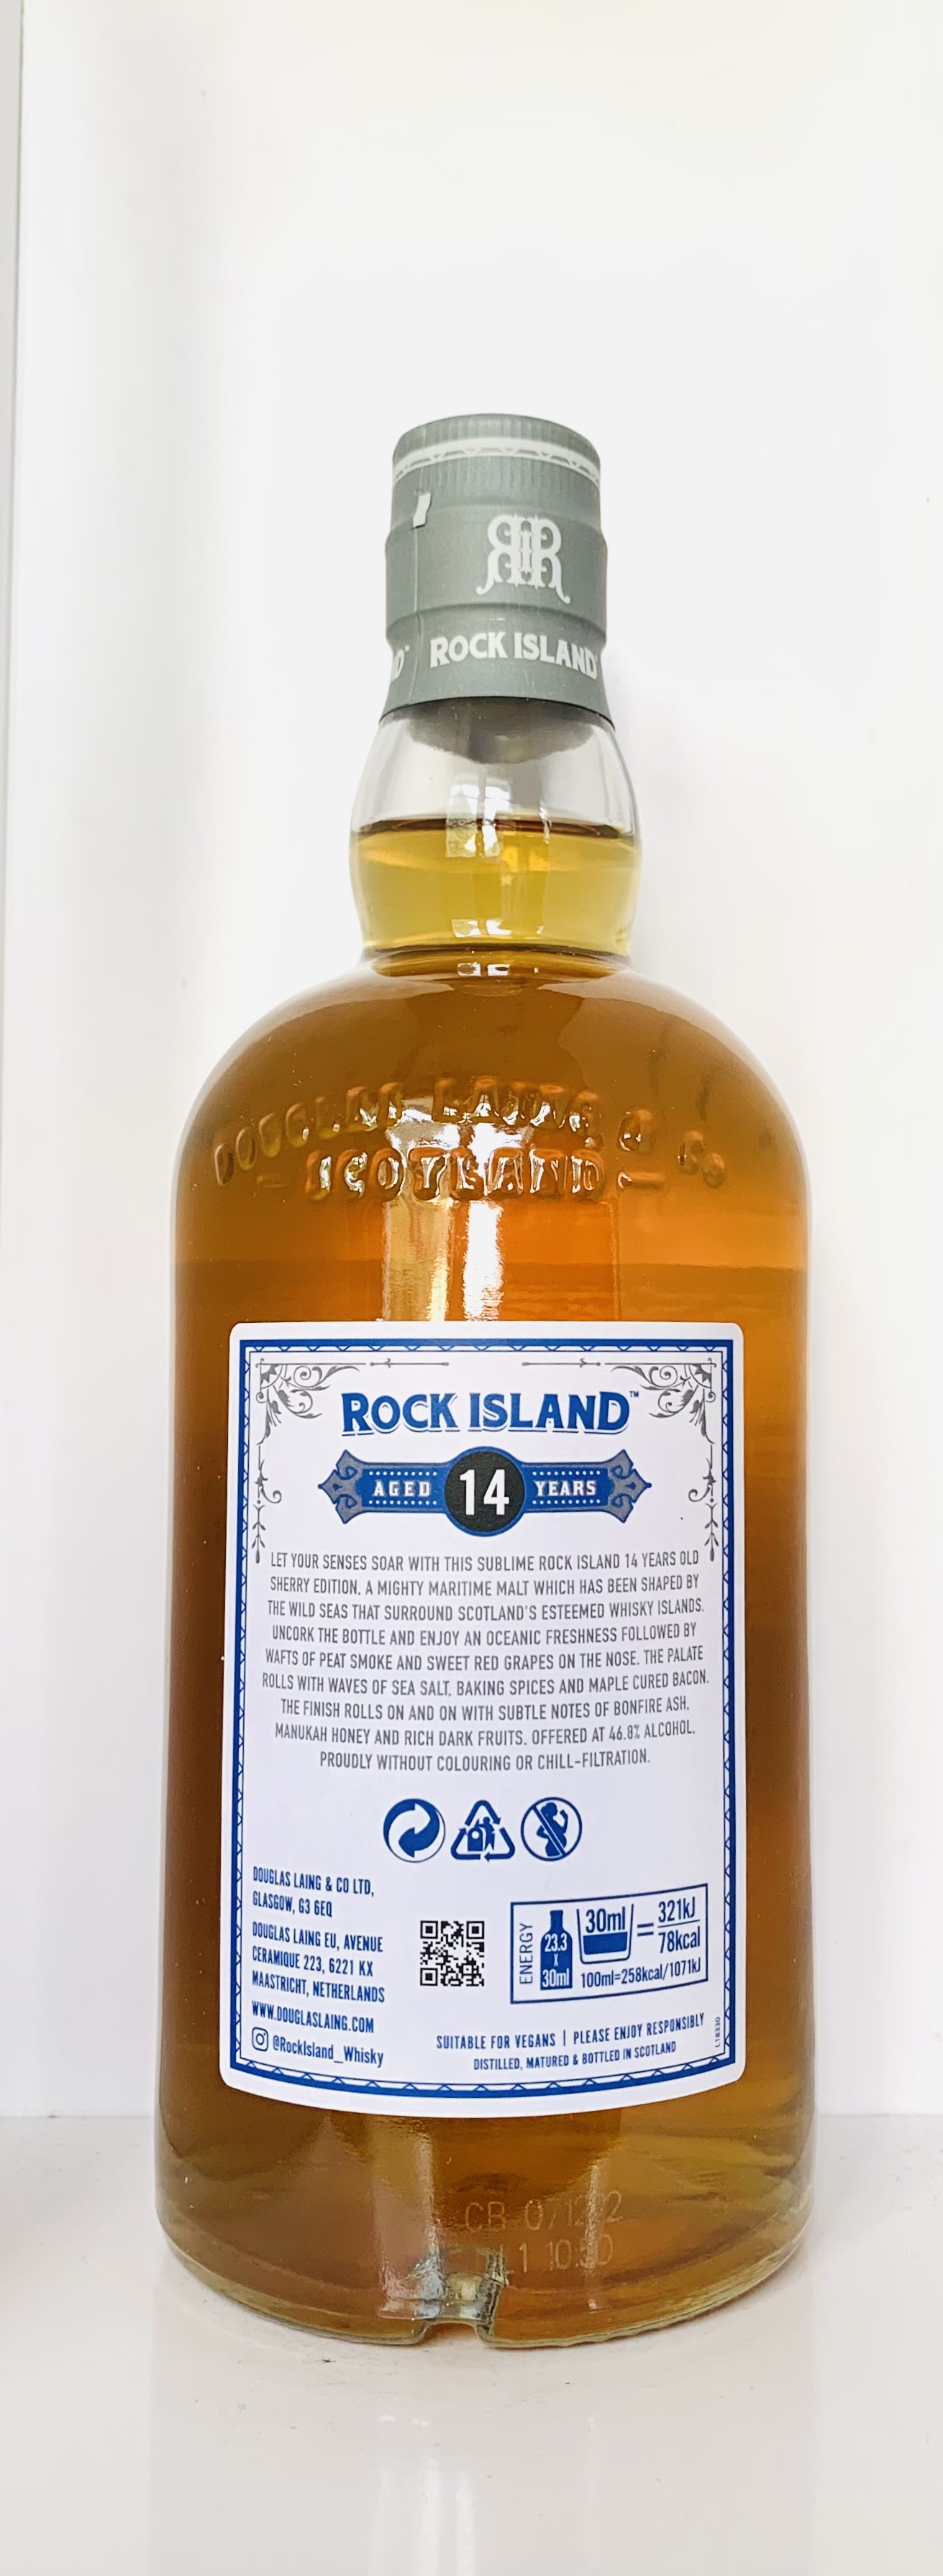 Rock Island 14 Jahre Sherry Edition